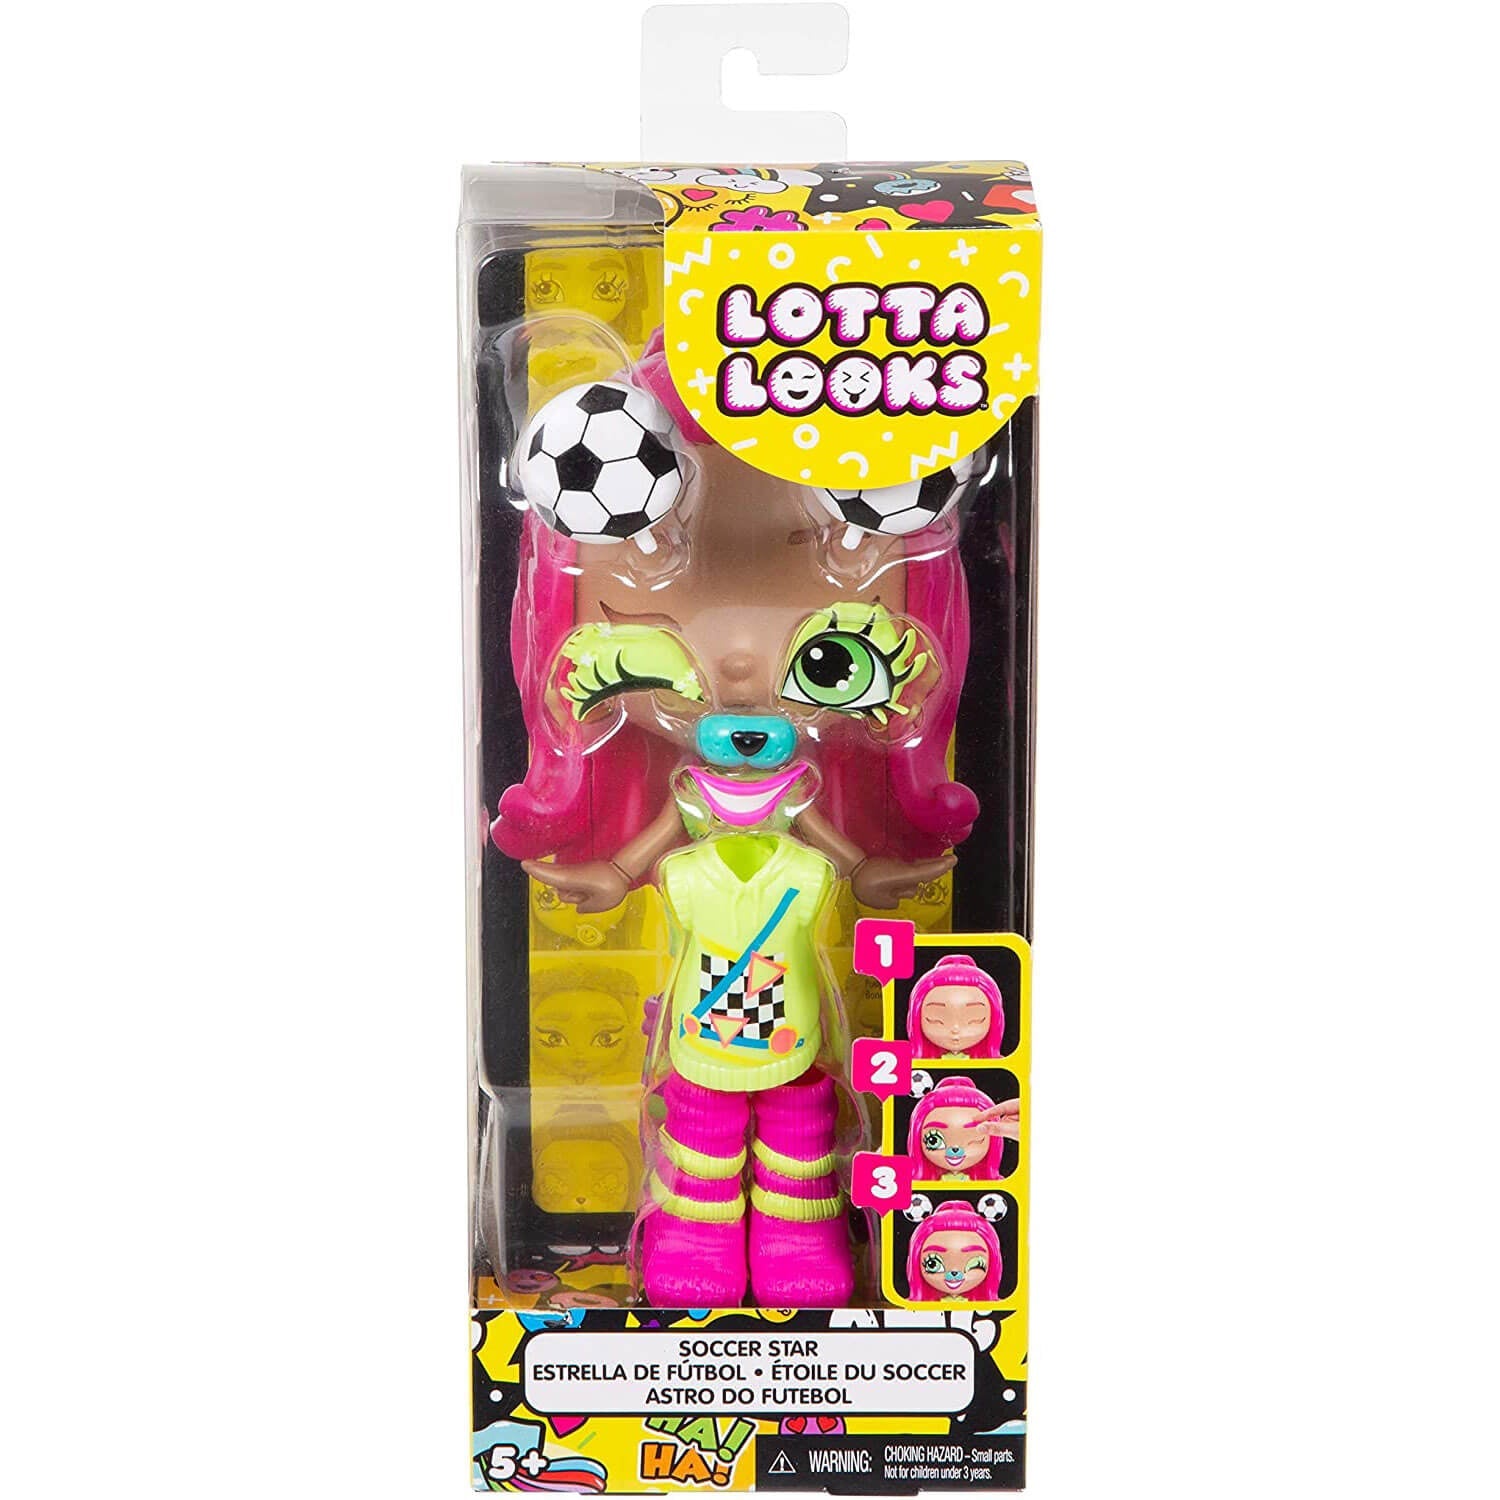 Lotta Looks Soccer Star Mood Accessory Pack